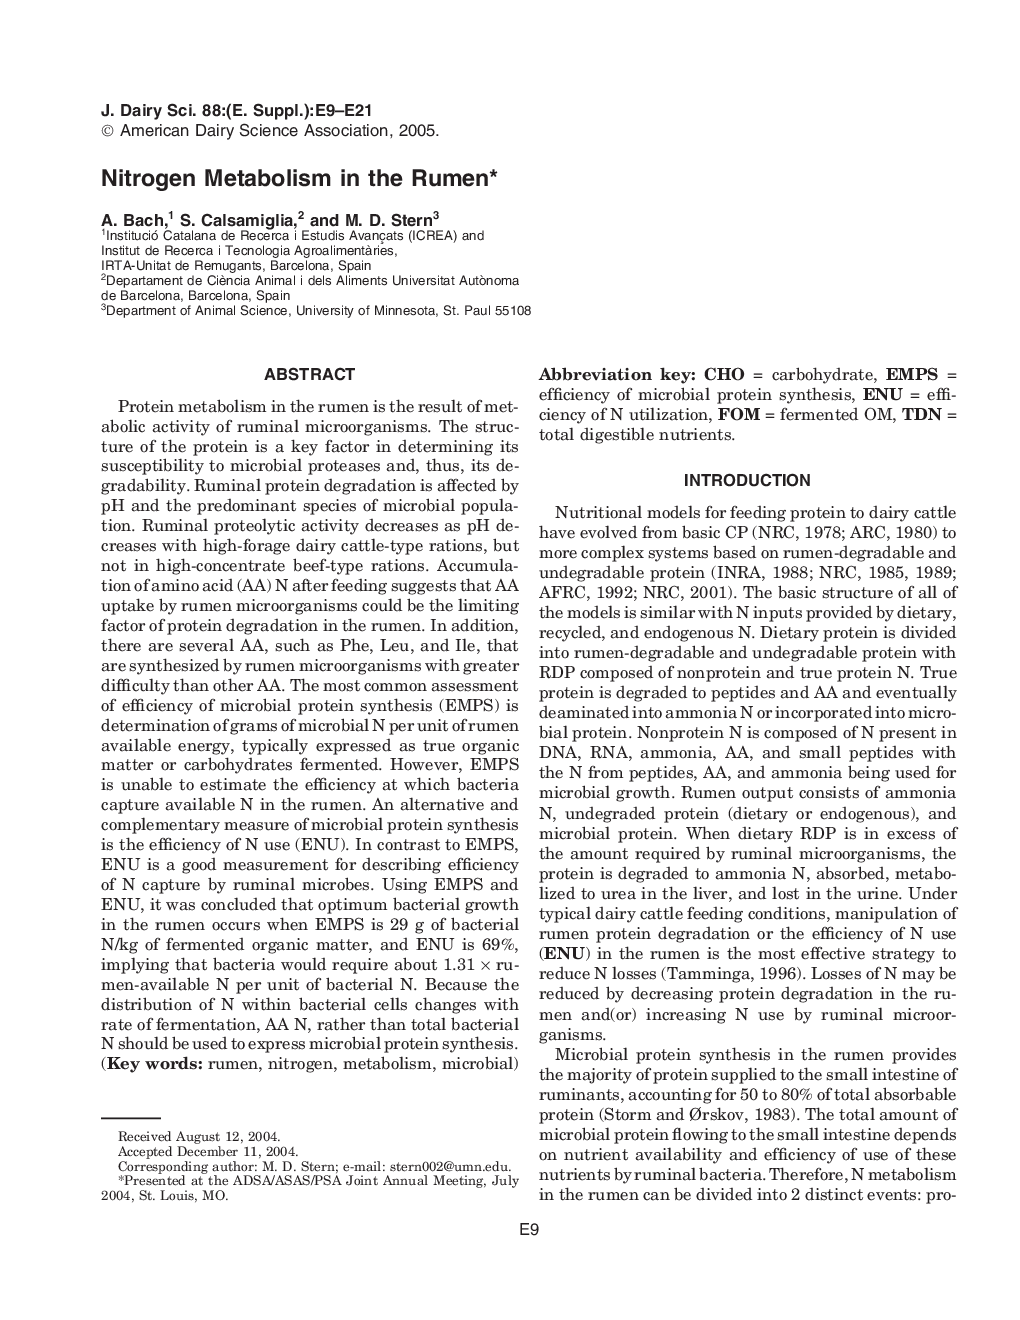 Nitrogen Metabolism in the Rumen*